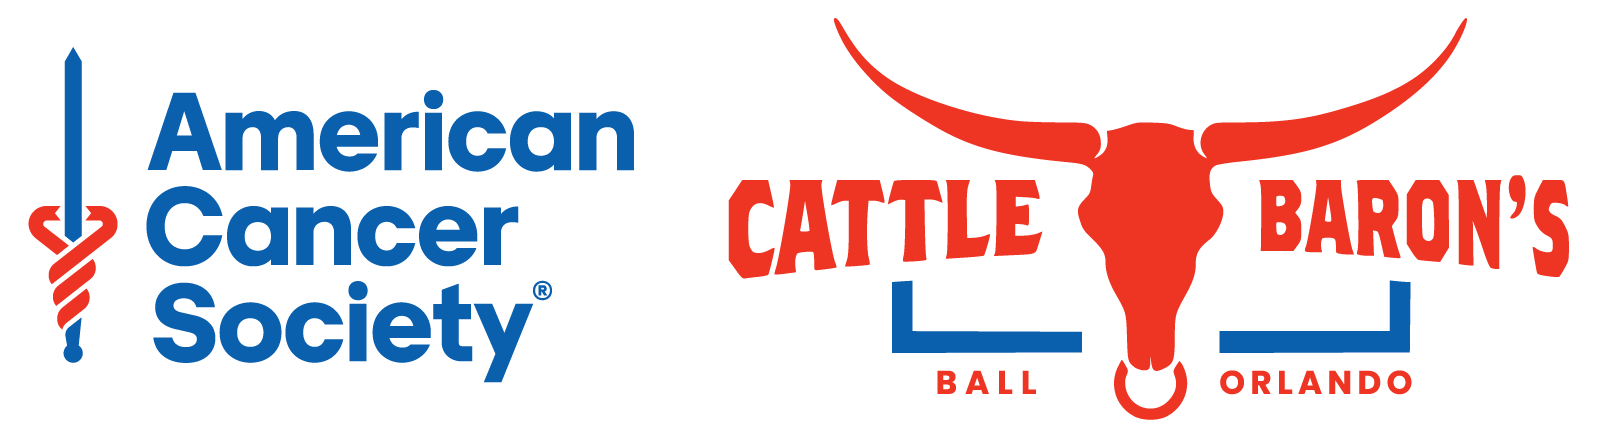 Cattle Baron Event Orlando